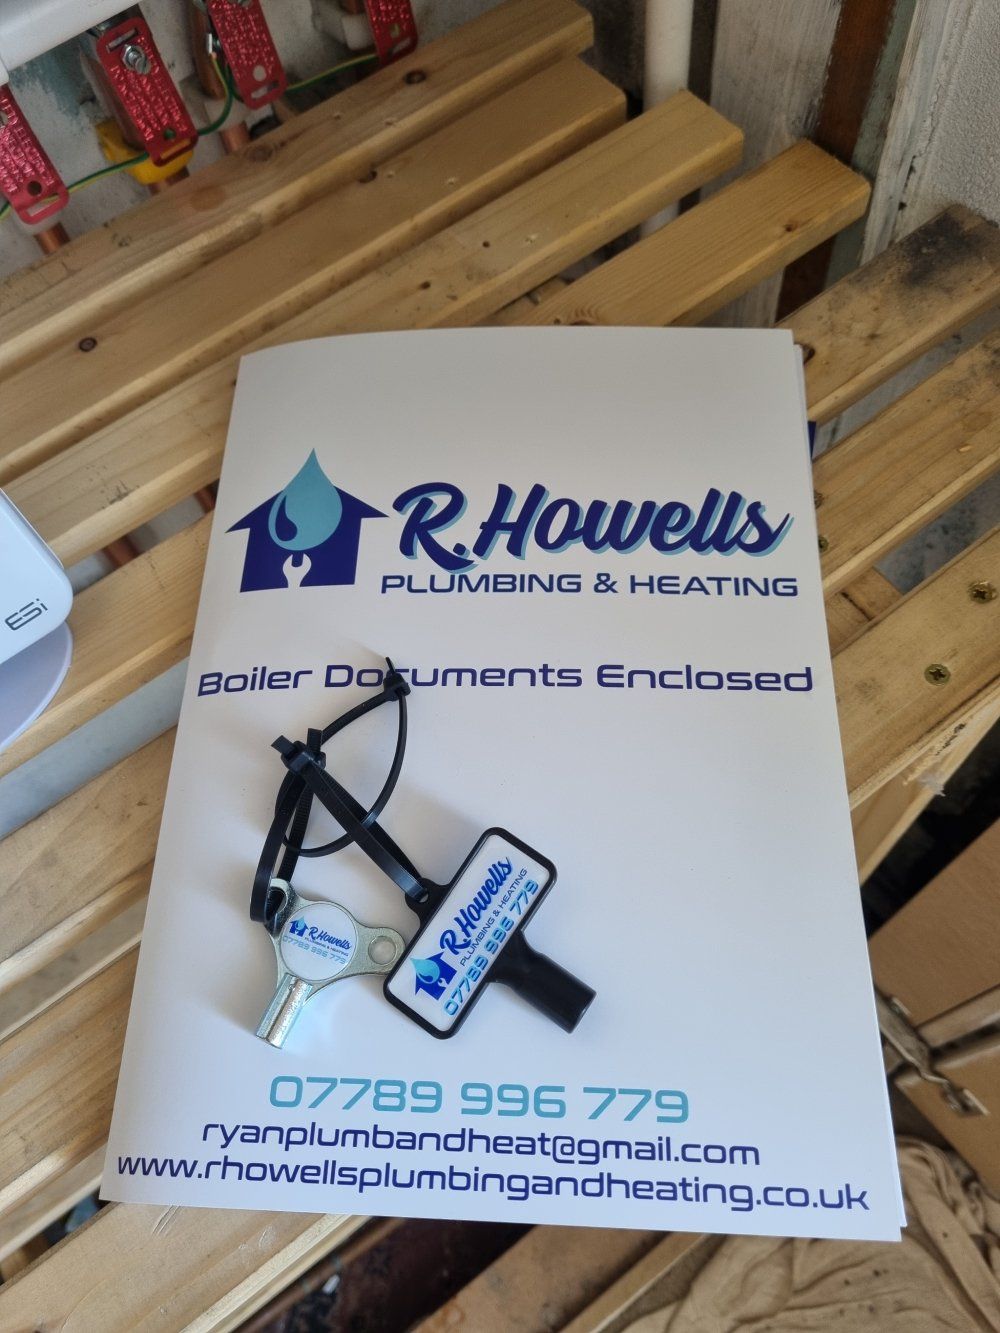 R Howells Plumbing and Heating Boiler Documents